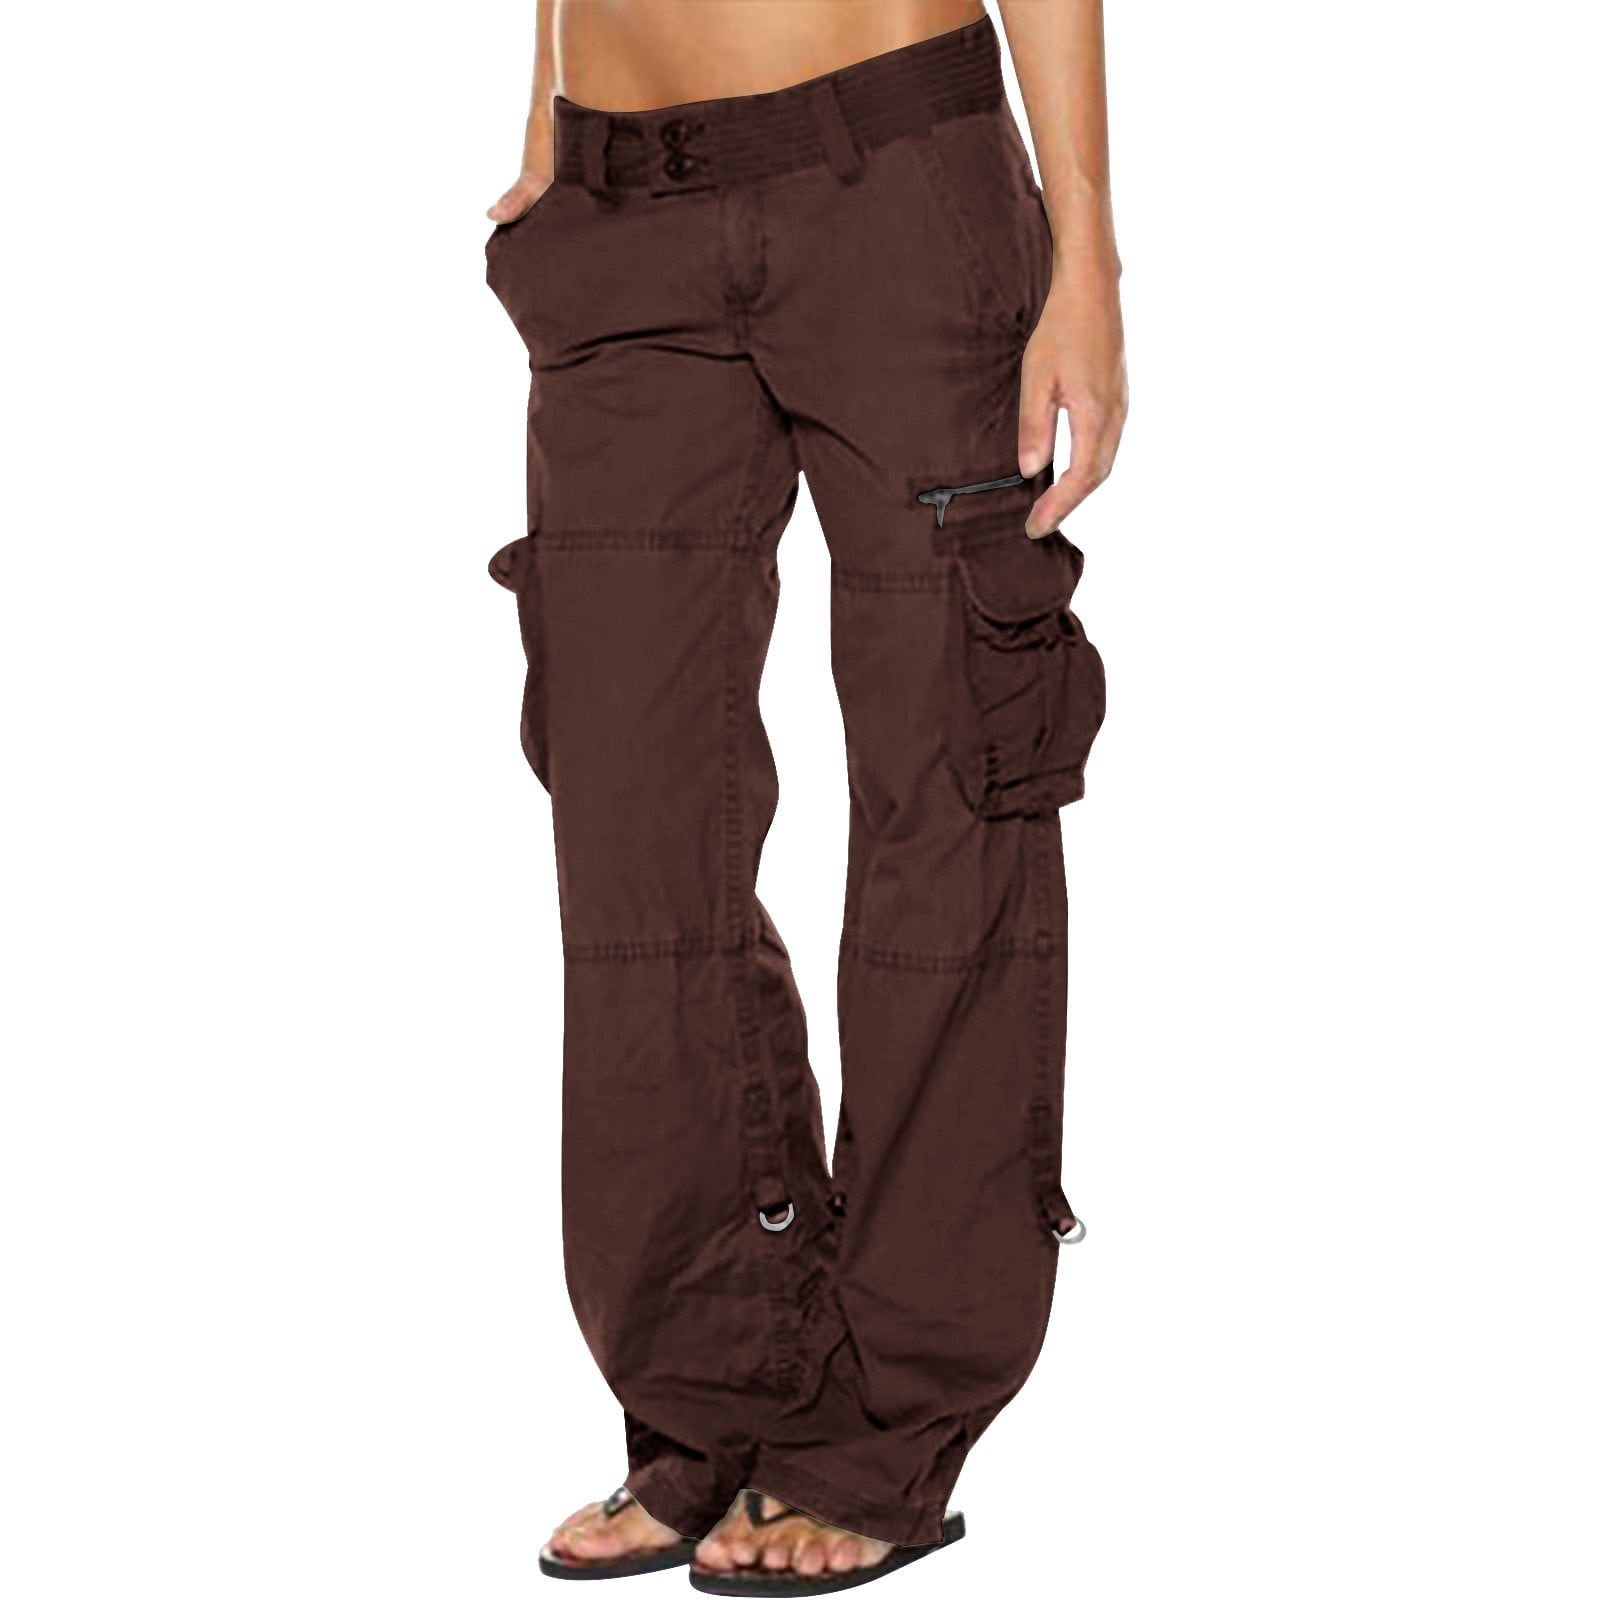 Zodggu Women Ladies Solid Pants Hippie Punk Trousers Streetwear